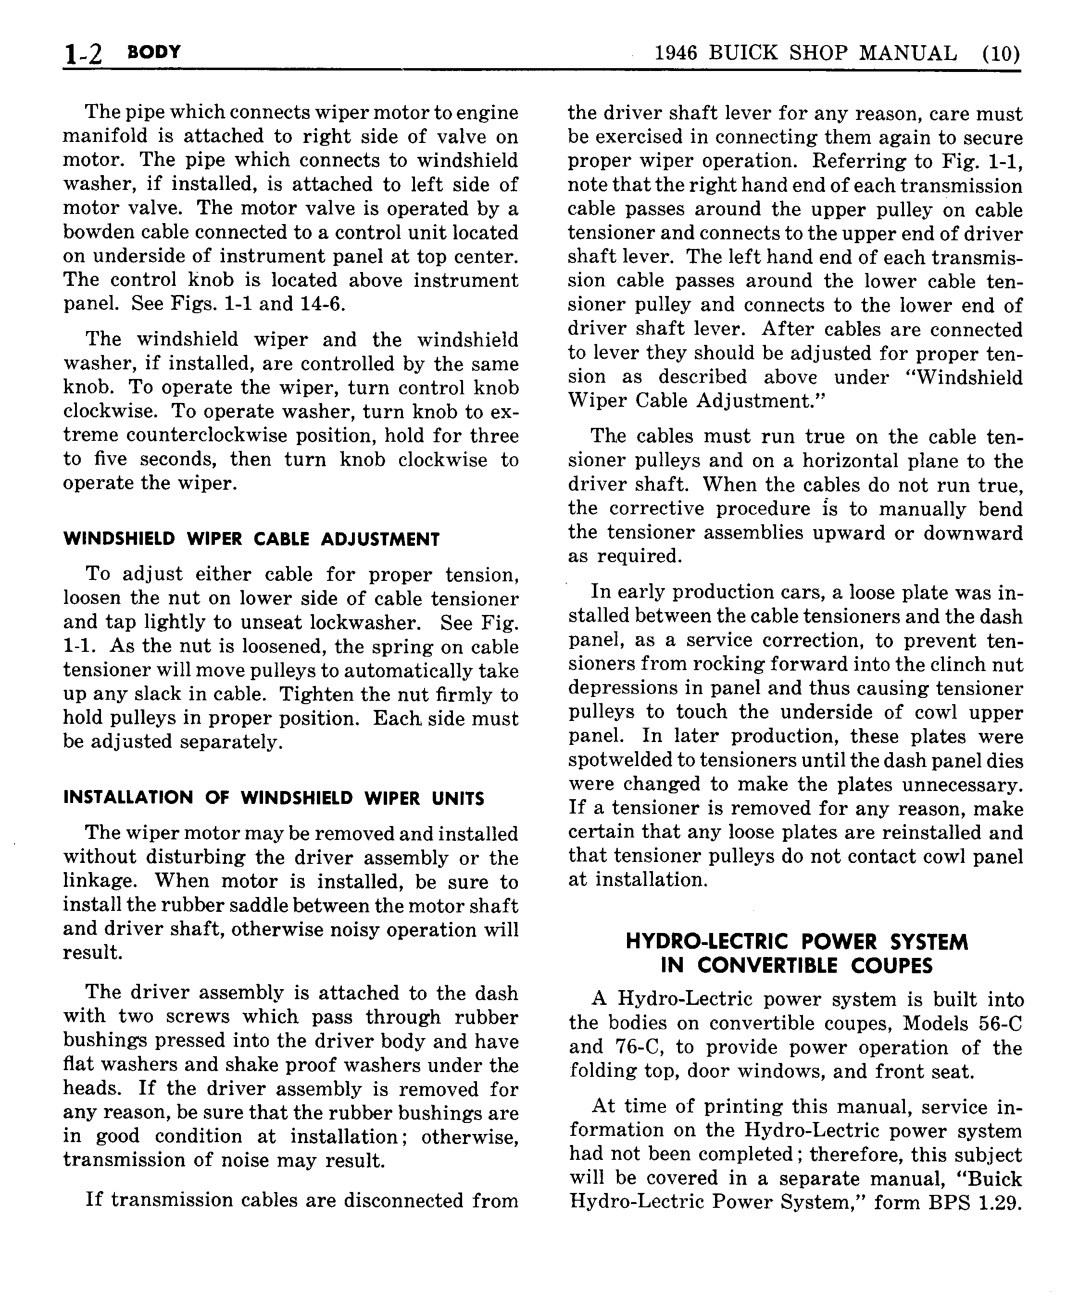 n_02 1946 Buick Shop Manual - Body-002-002.jpg